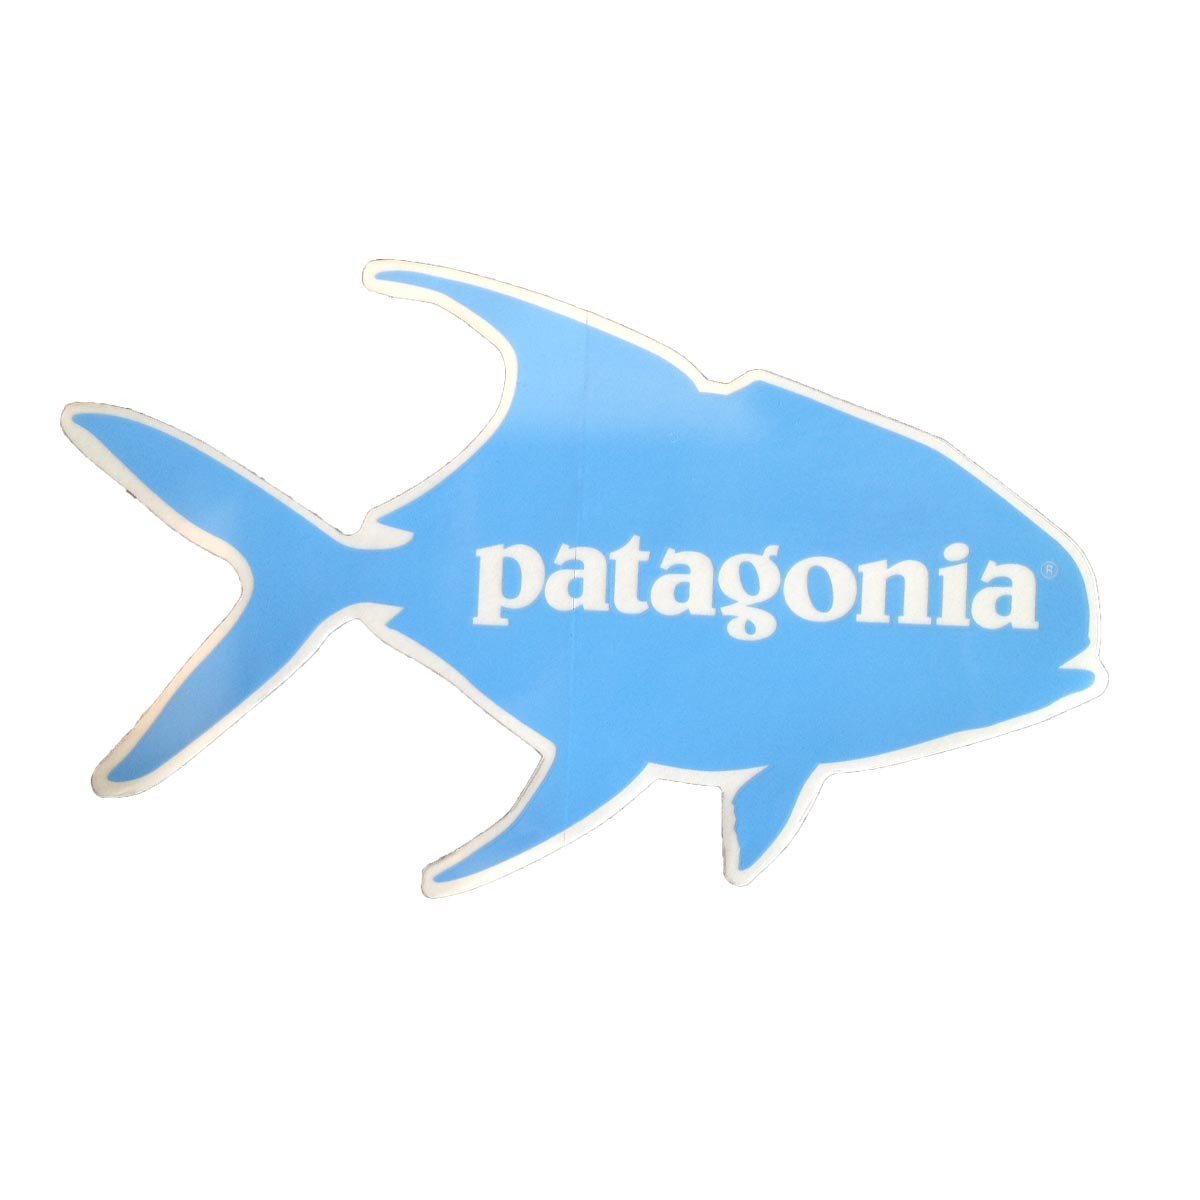 Patagonia Tarpon Fish Sticker | Vail Valley Anglers